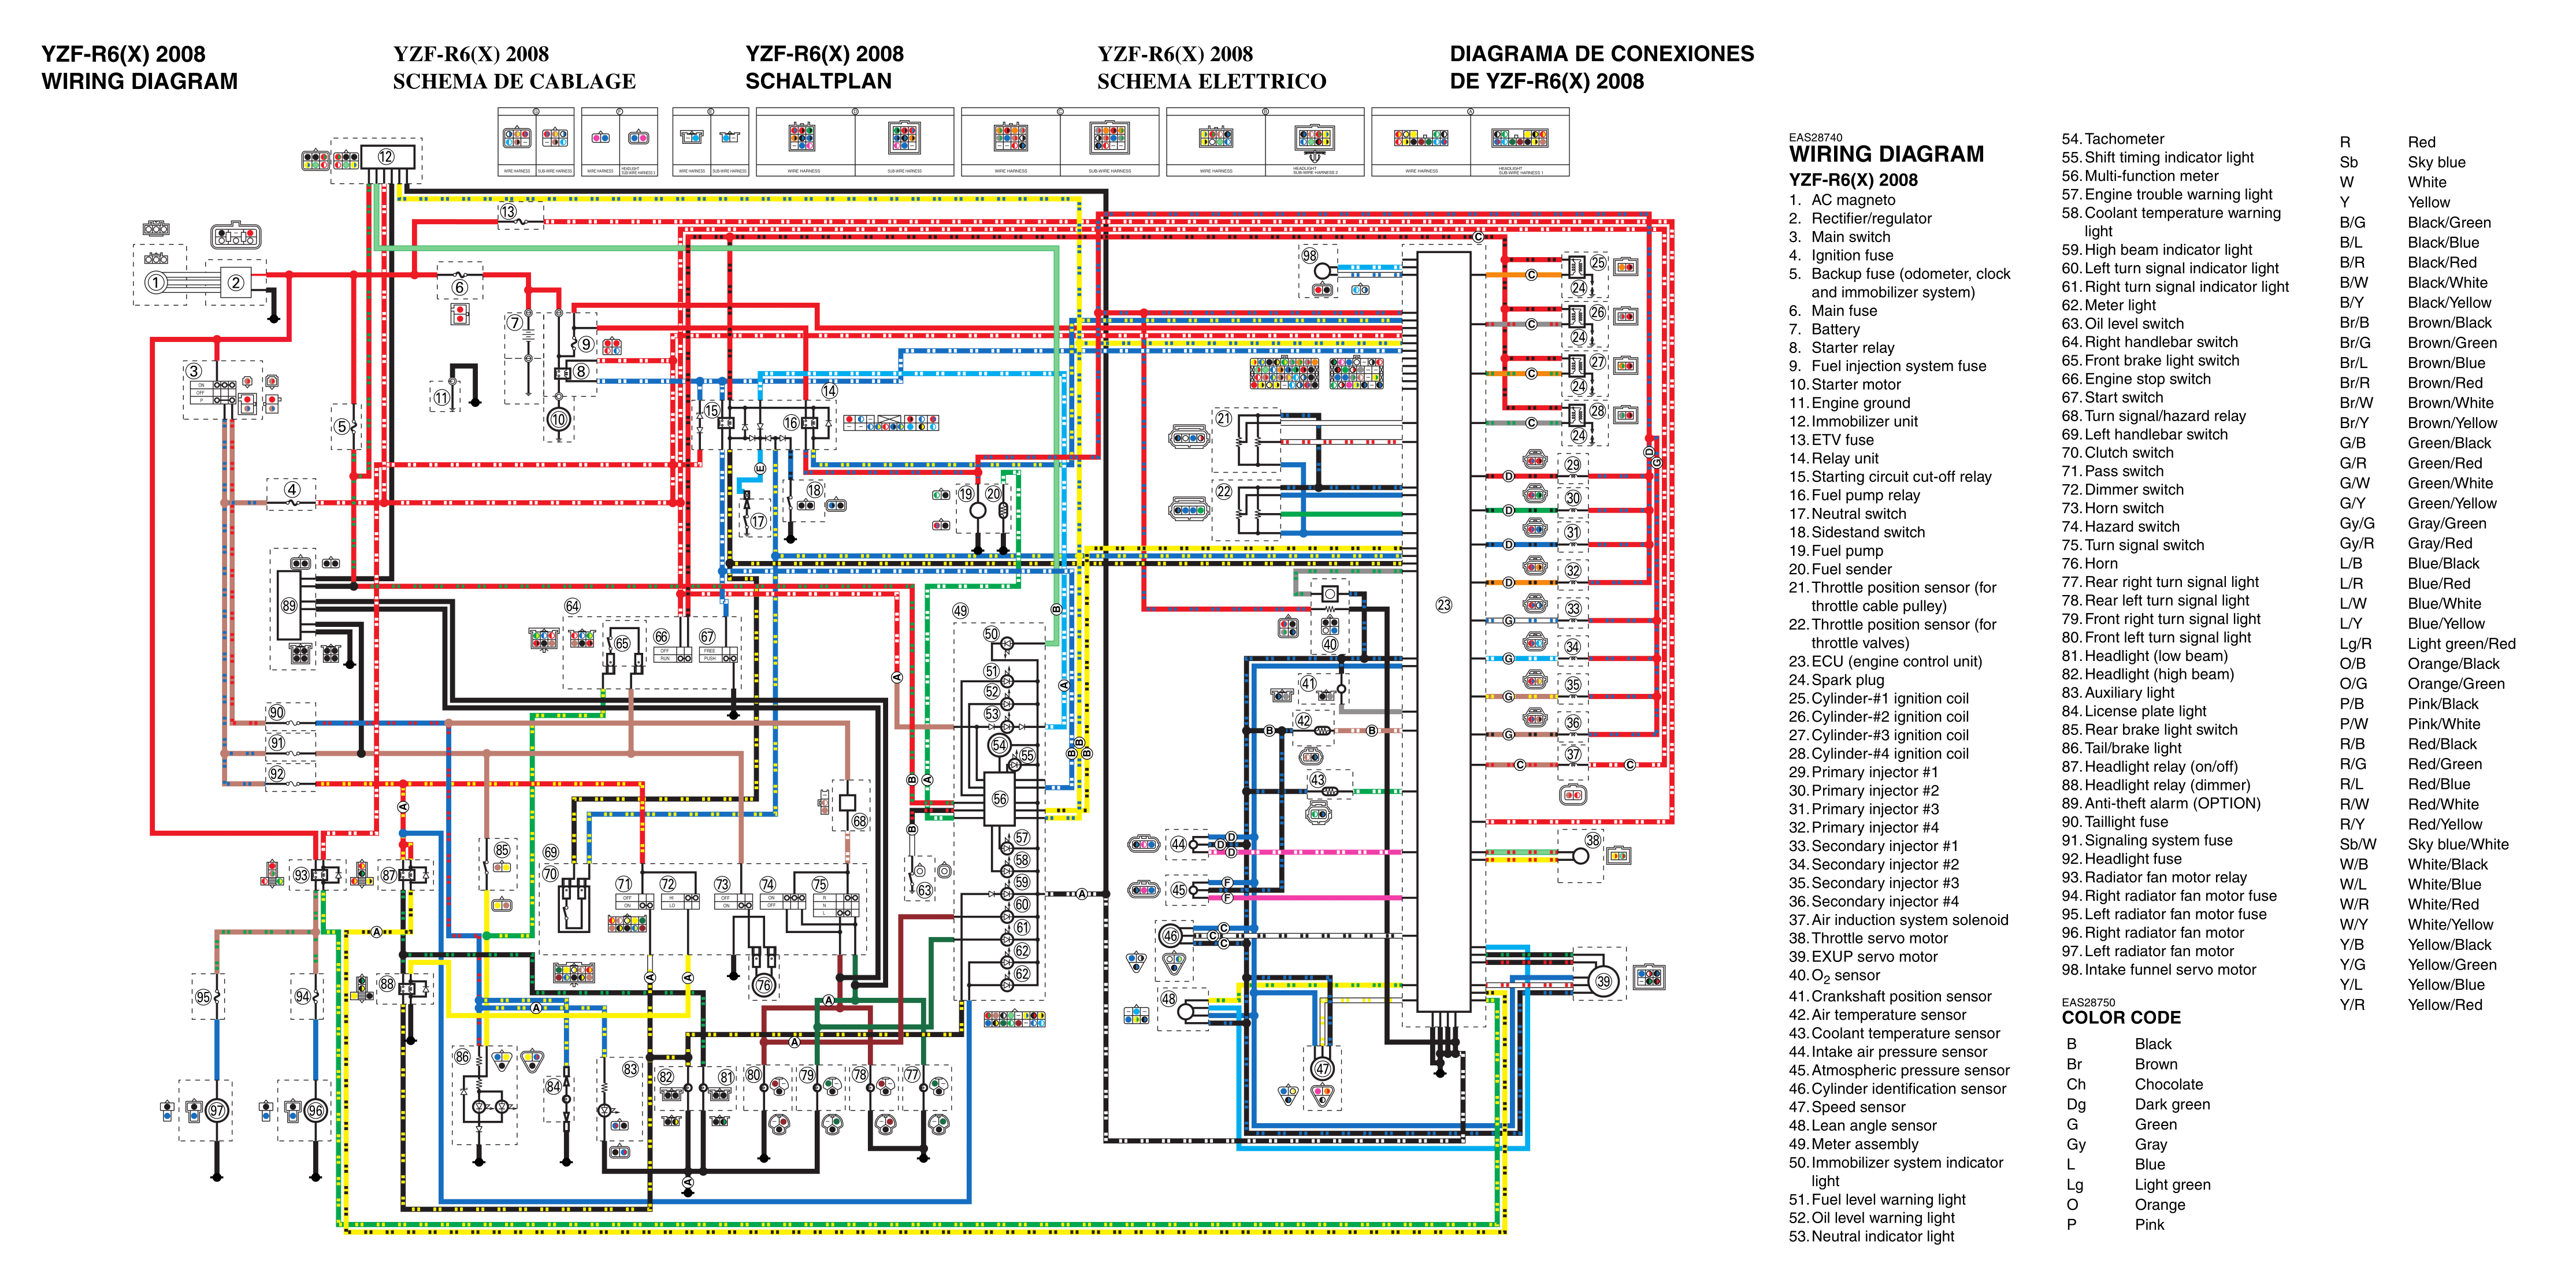 Wiring diagrams  2000 Yamaha R6 Wiring Harness Diagram    Shifting ContRoll